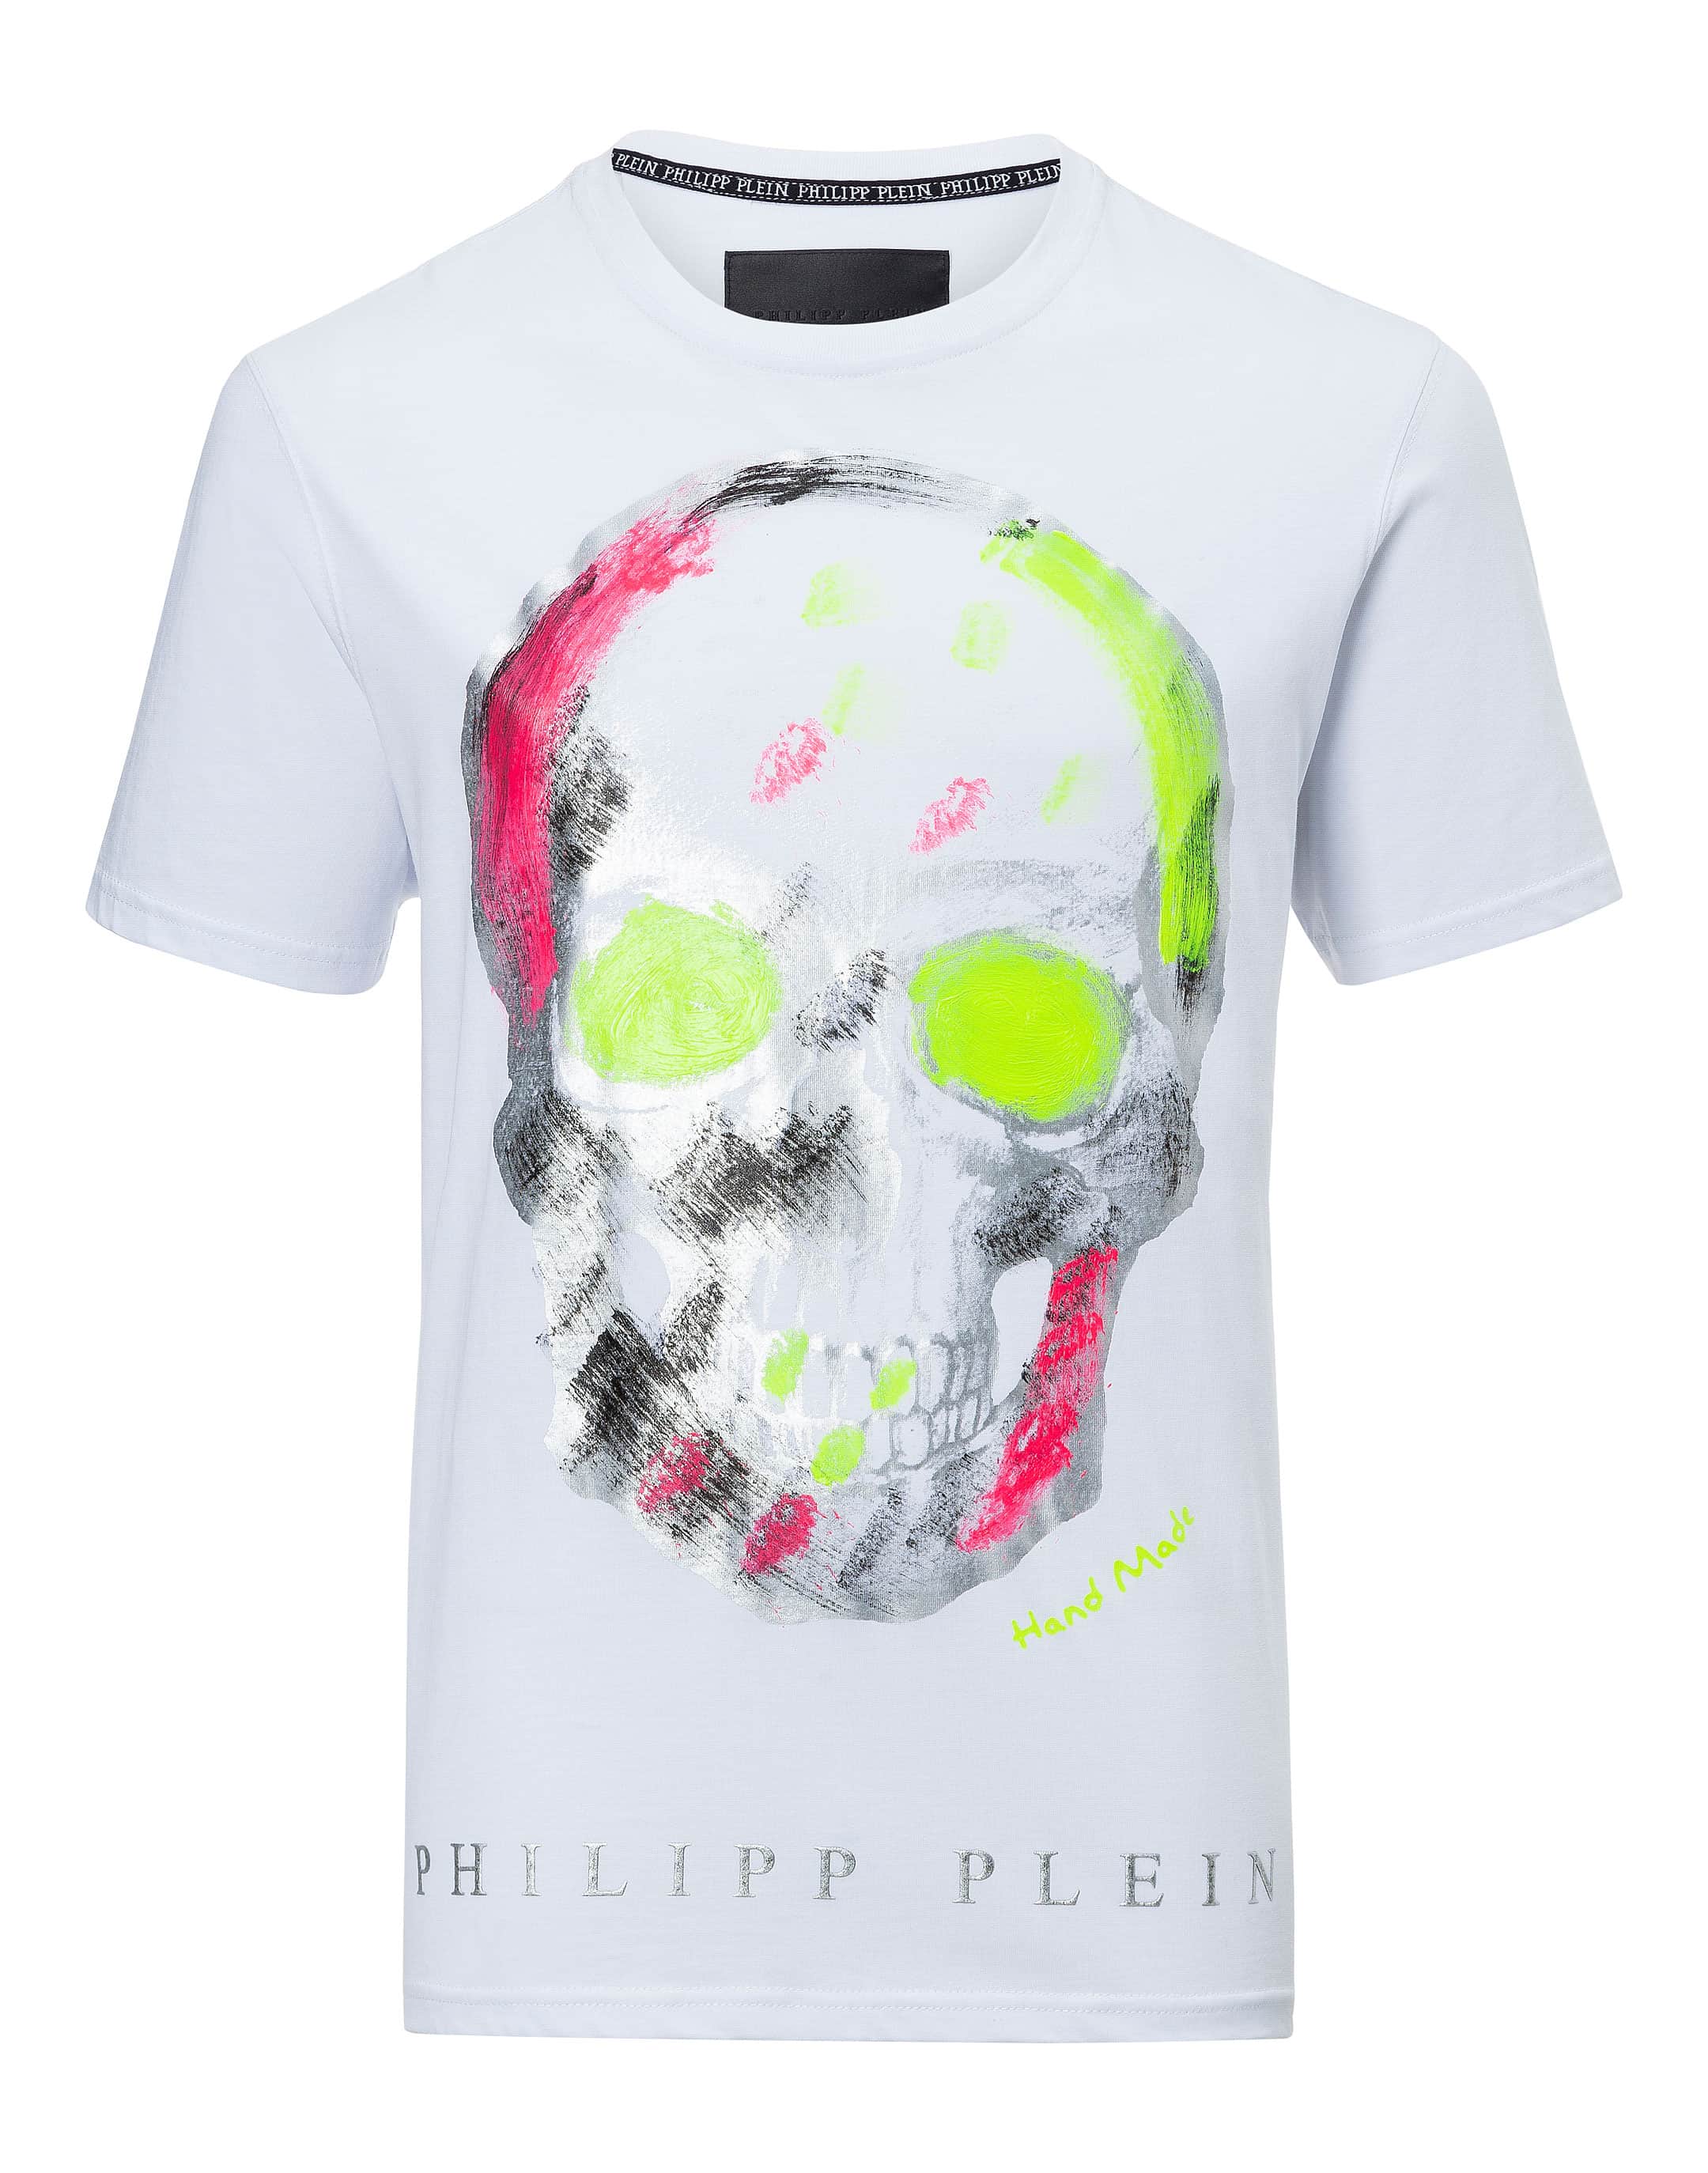 philipp plein t shirt india